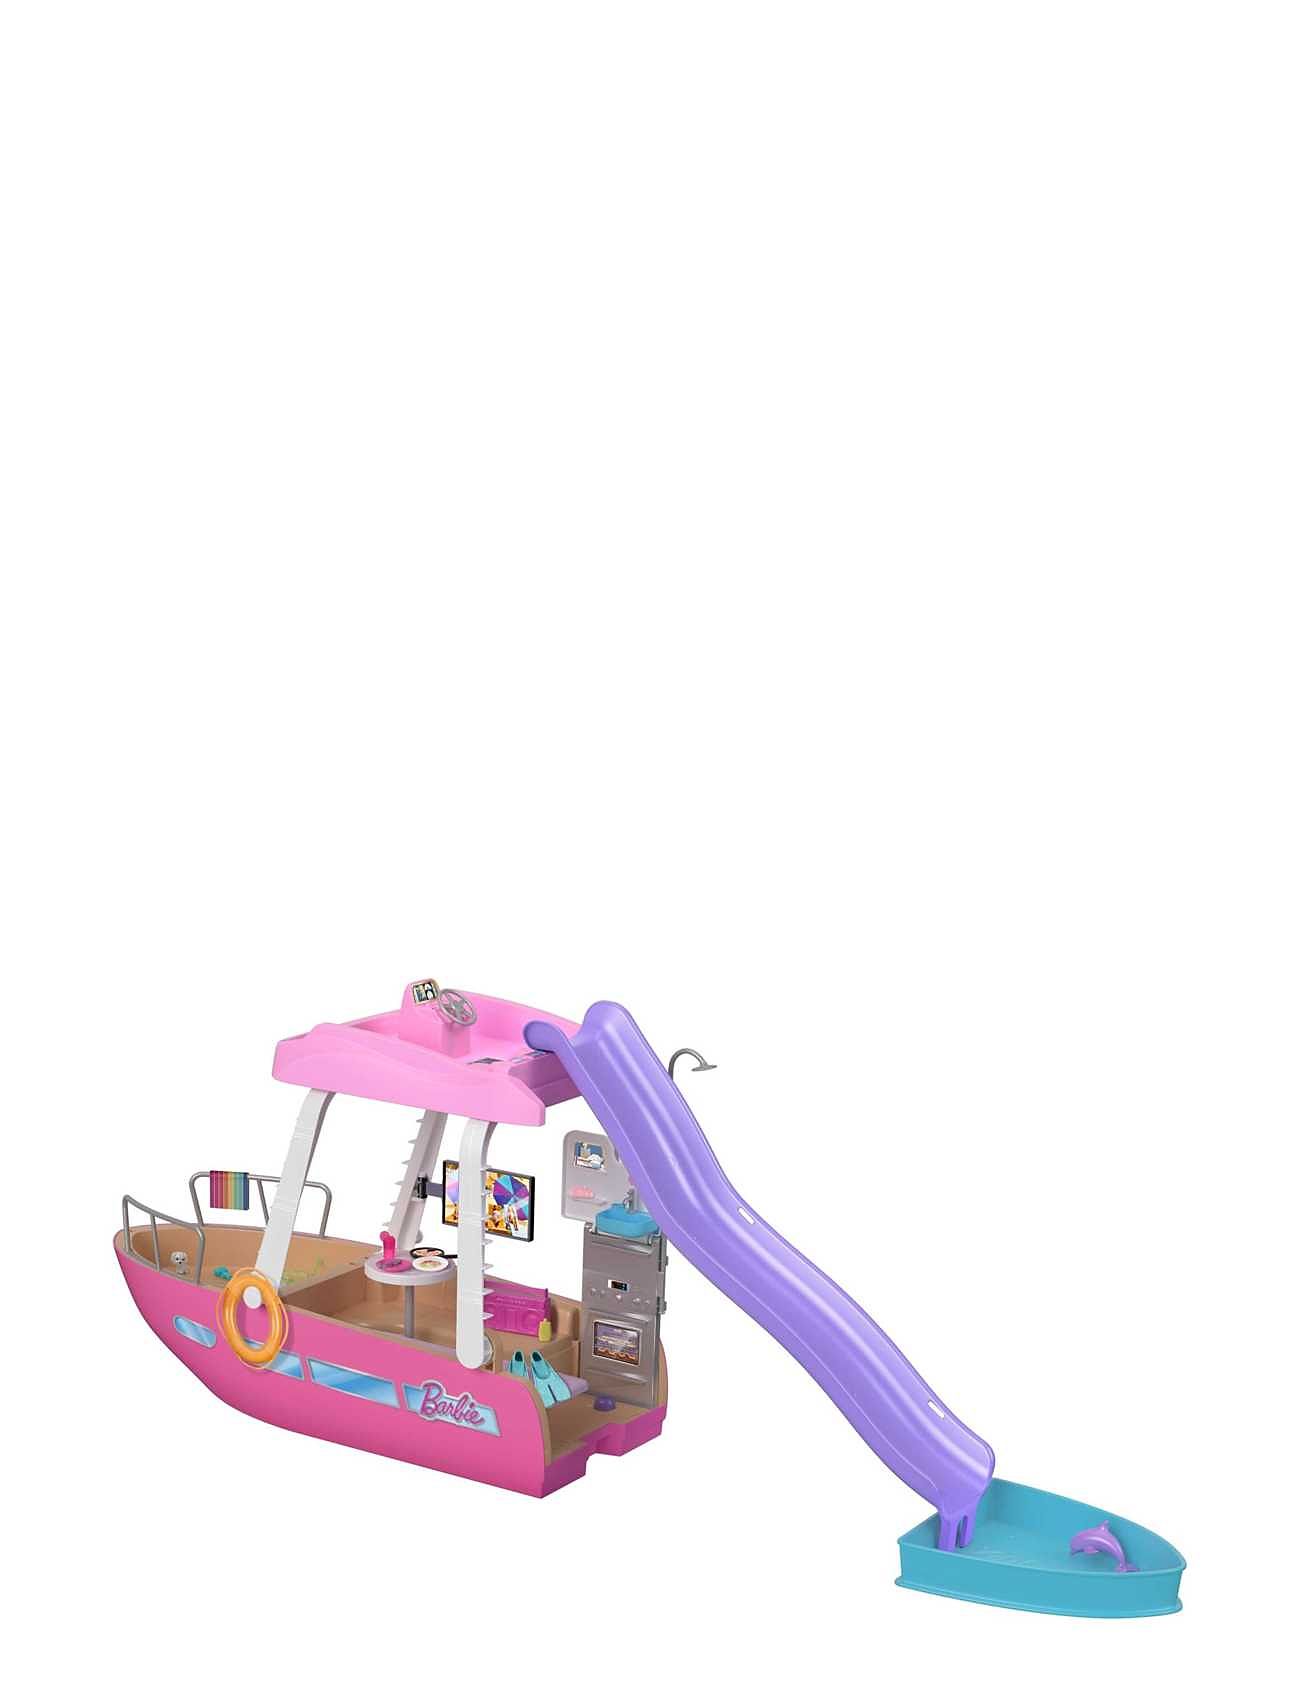 Barbie® Dream Boat™ Playset Toys Dolls & Accessories Dolls Accessories Multi/patterned Barbie